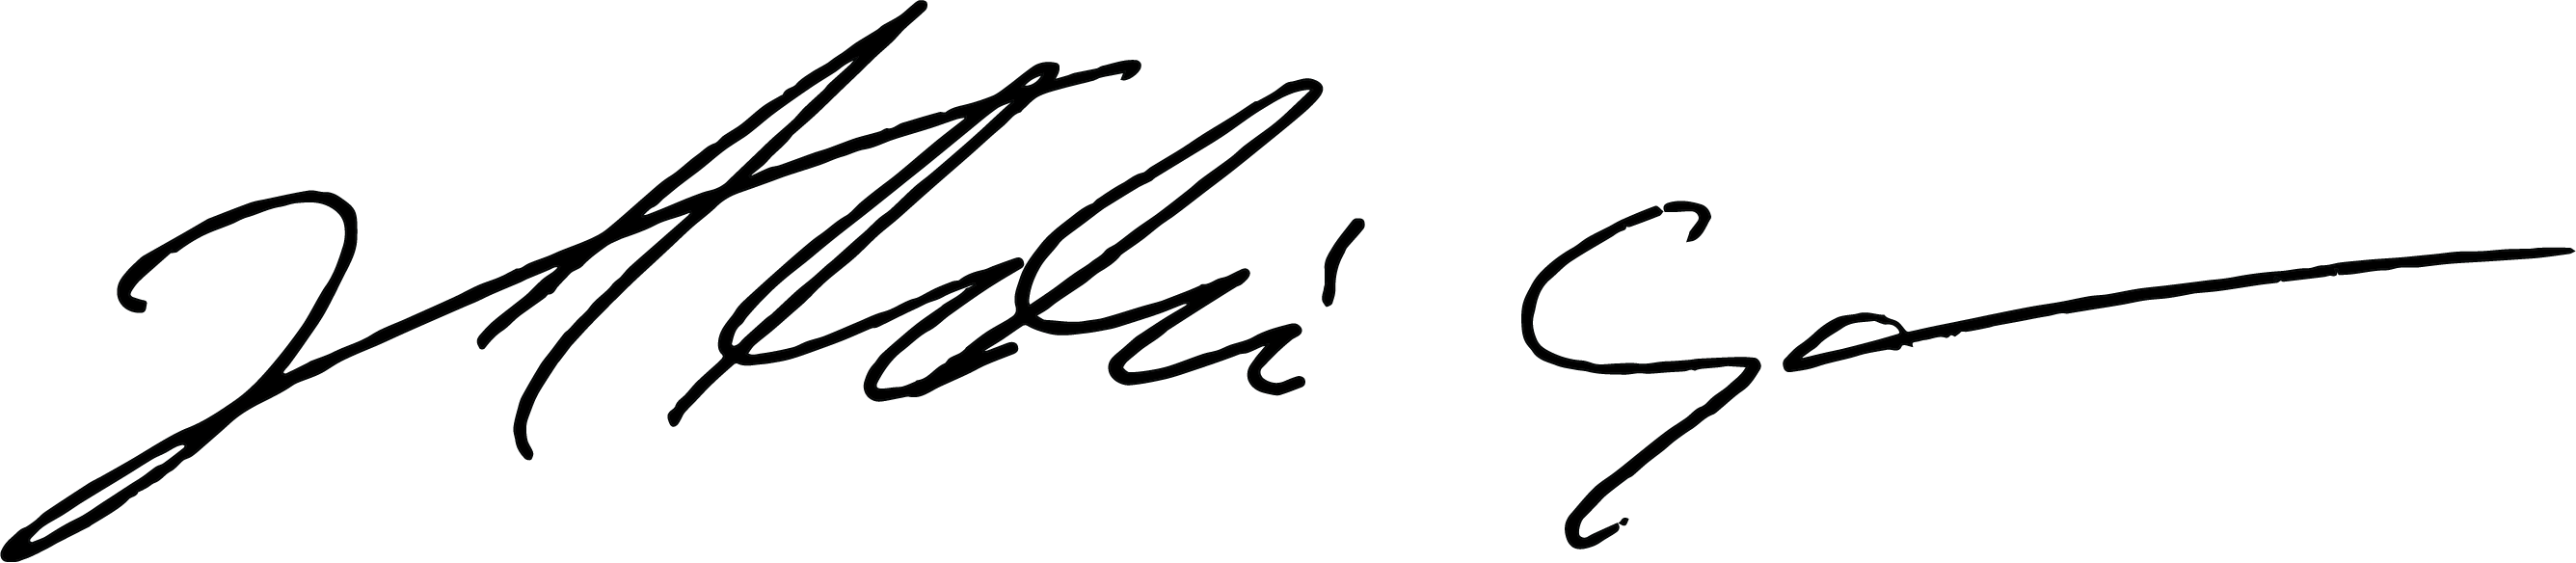 Groves_Alasdair Vector Signature